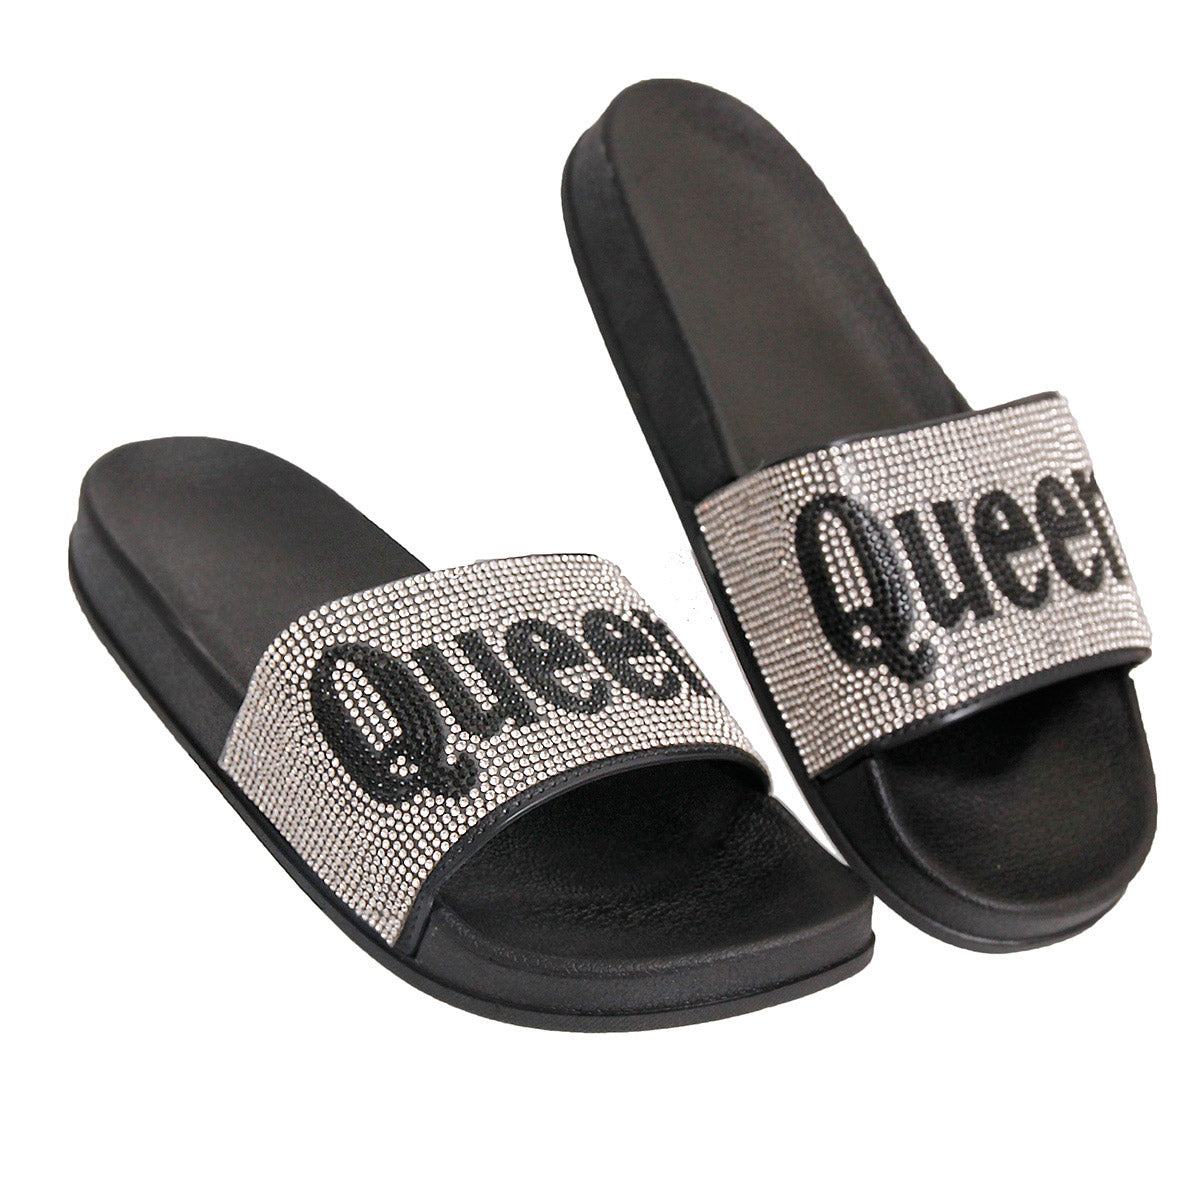 Size 12 Queen Silver Slides